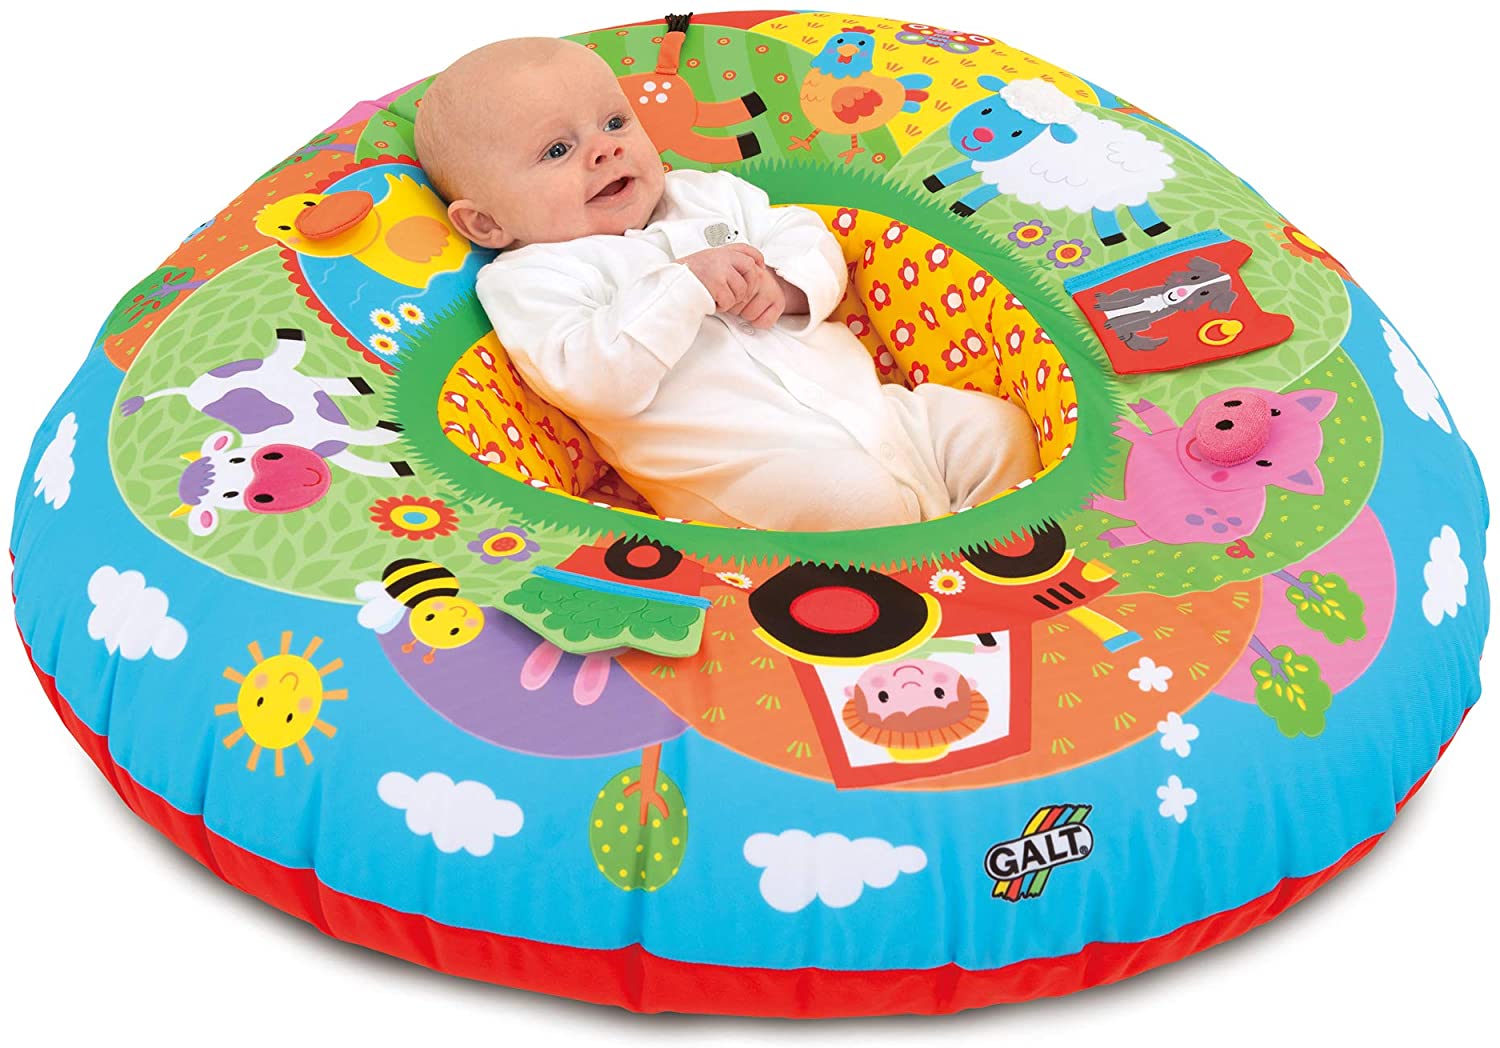 Galt Toys, Playnest - Farm, Baby Activity Center & Floor Seat, Multicolor - image 1 of 4